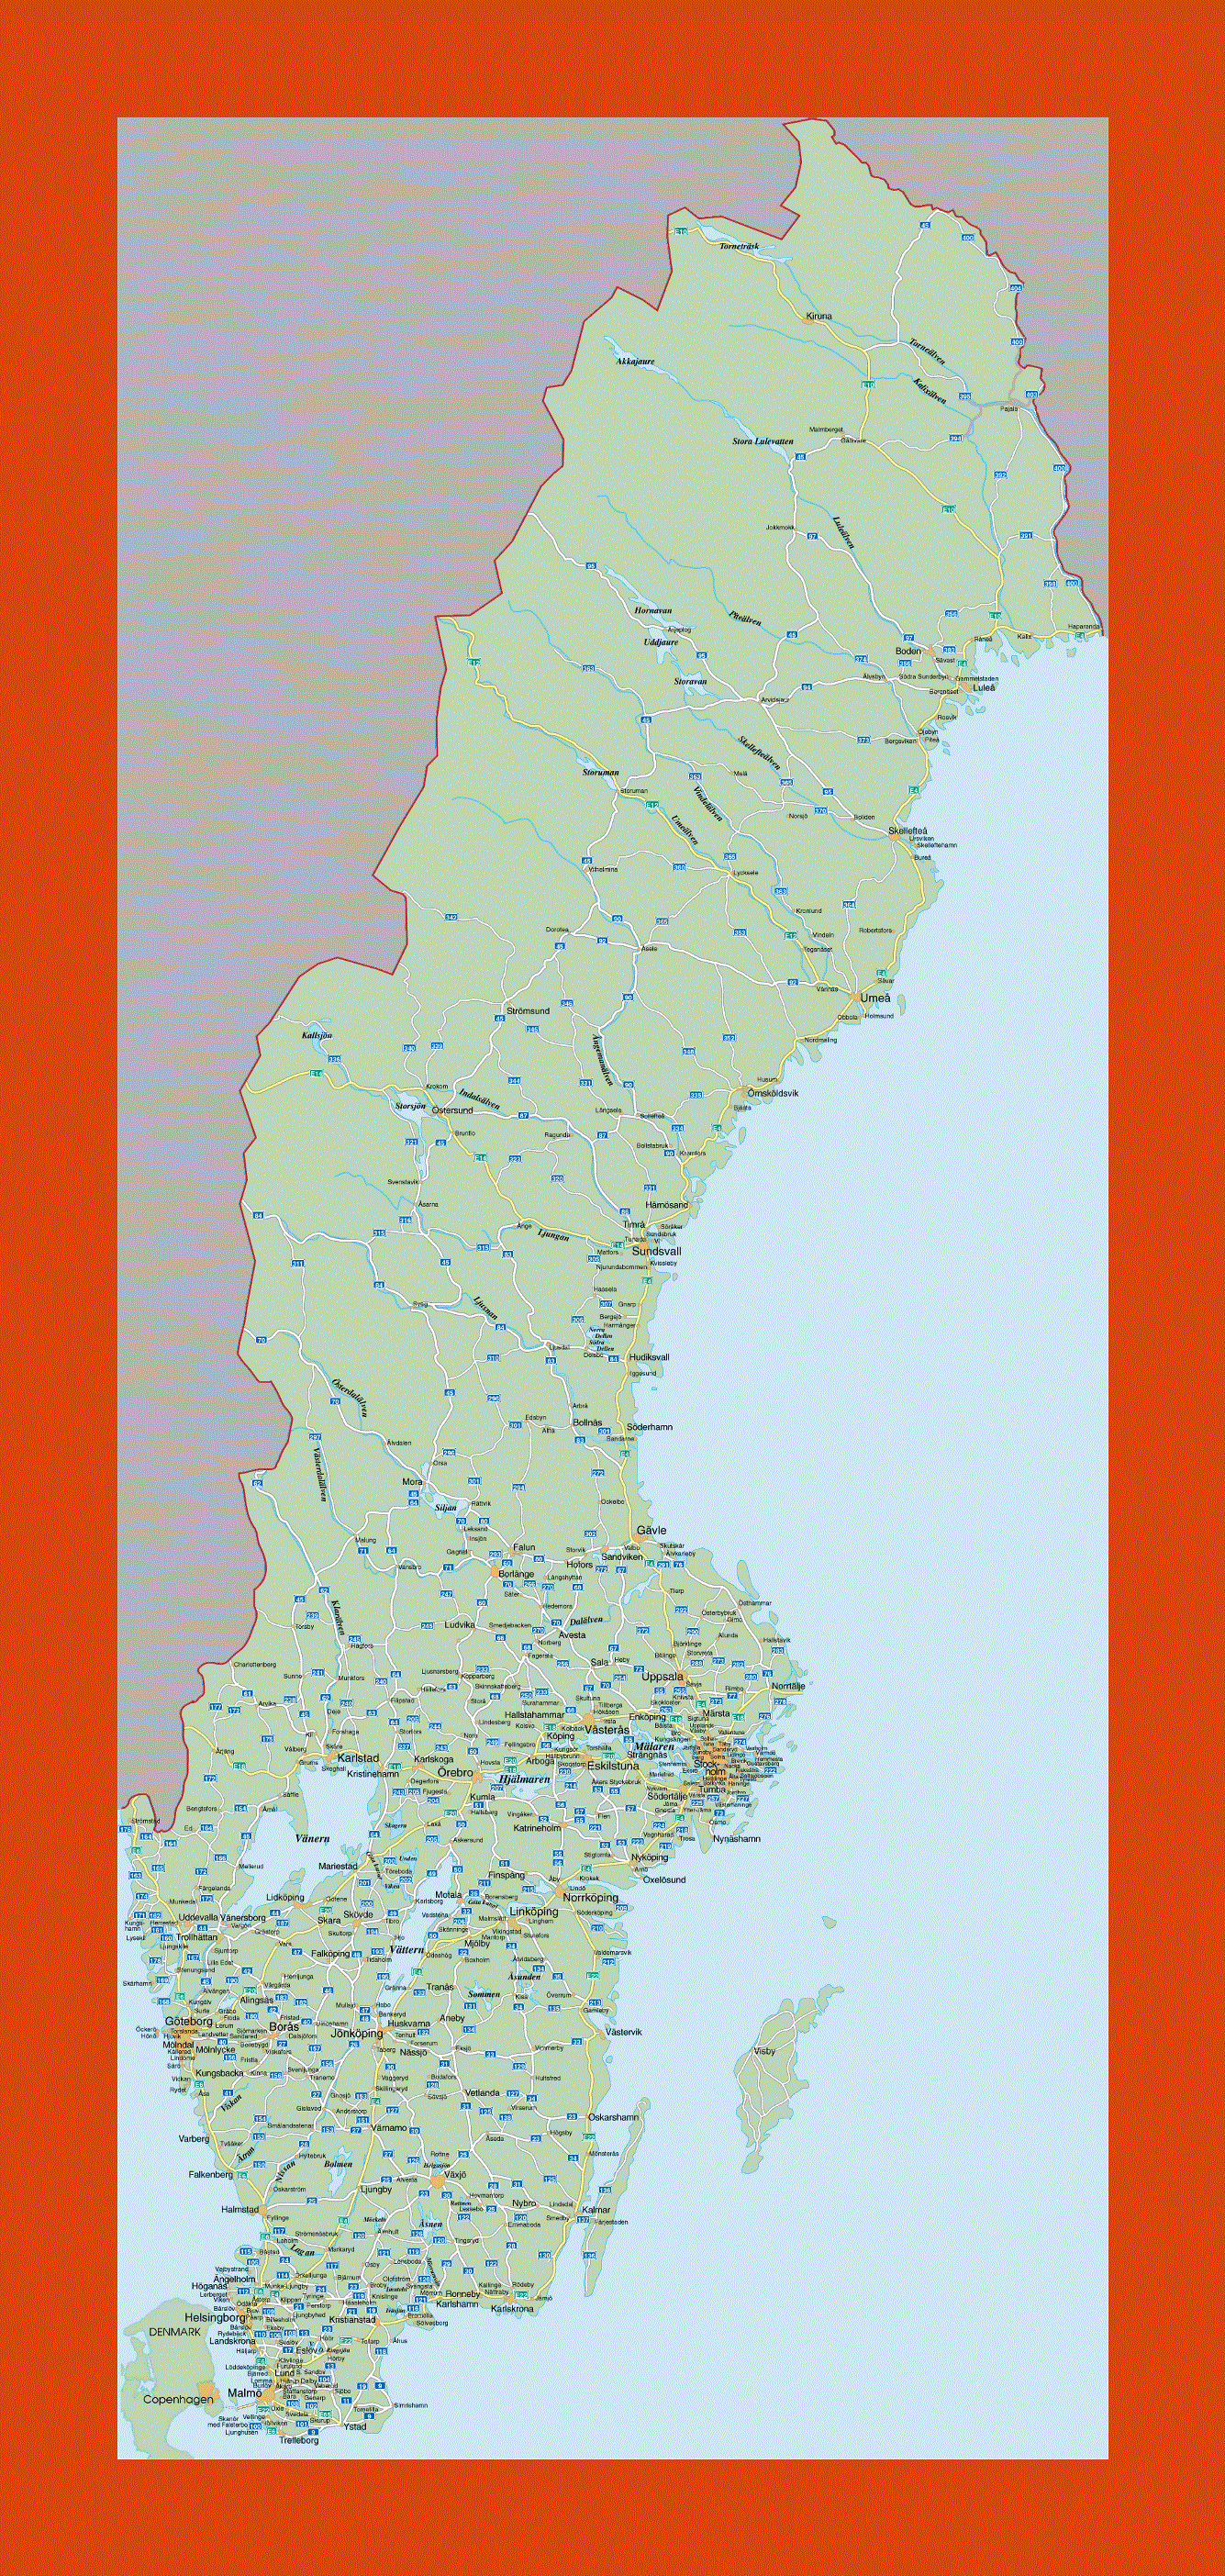 Road map of Sweden